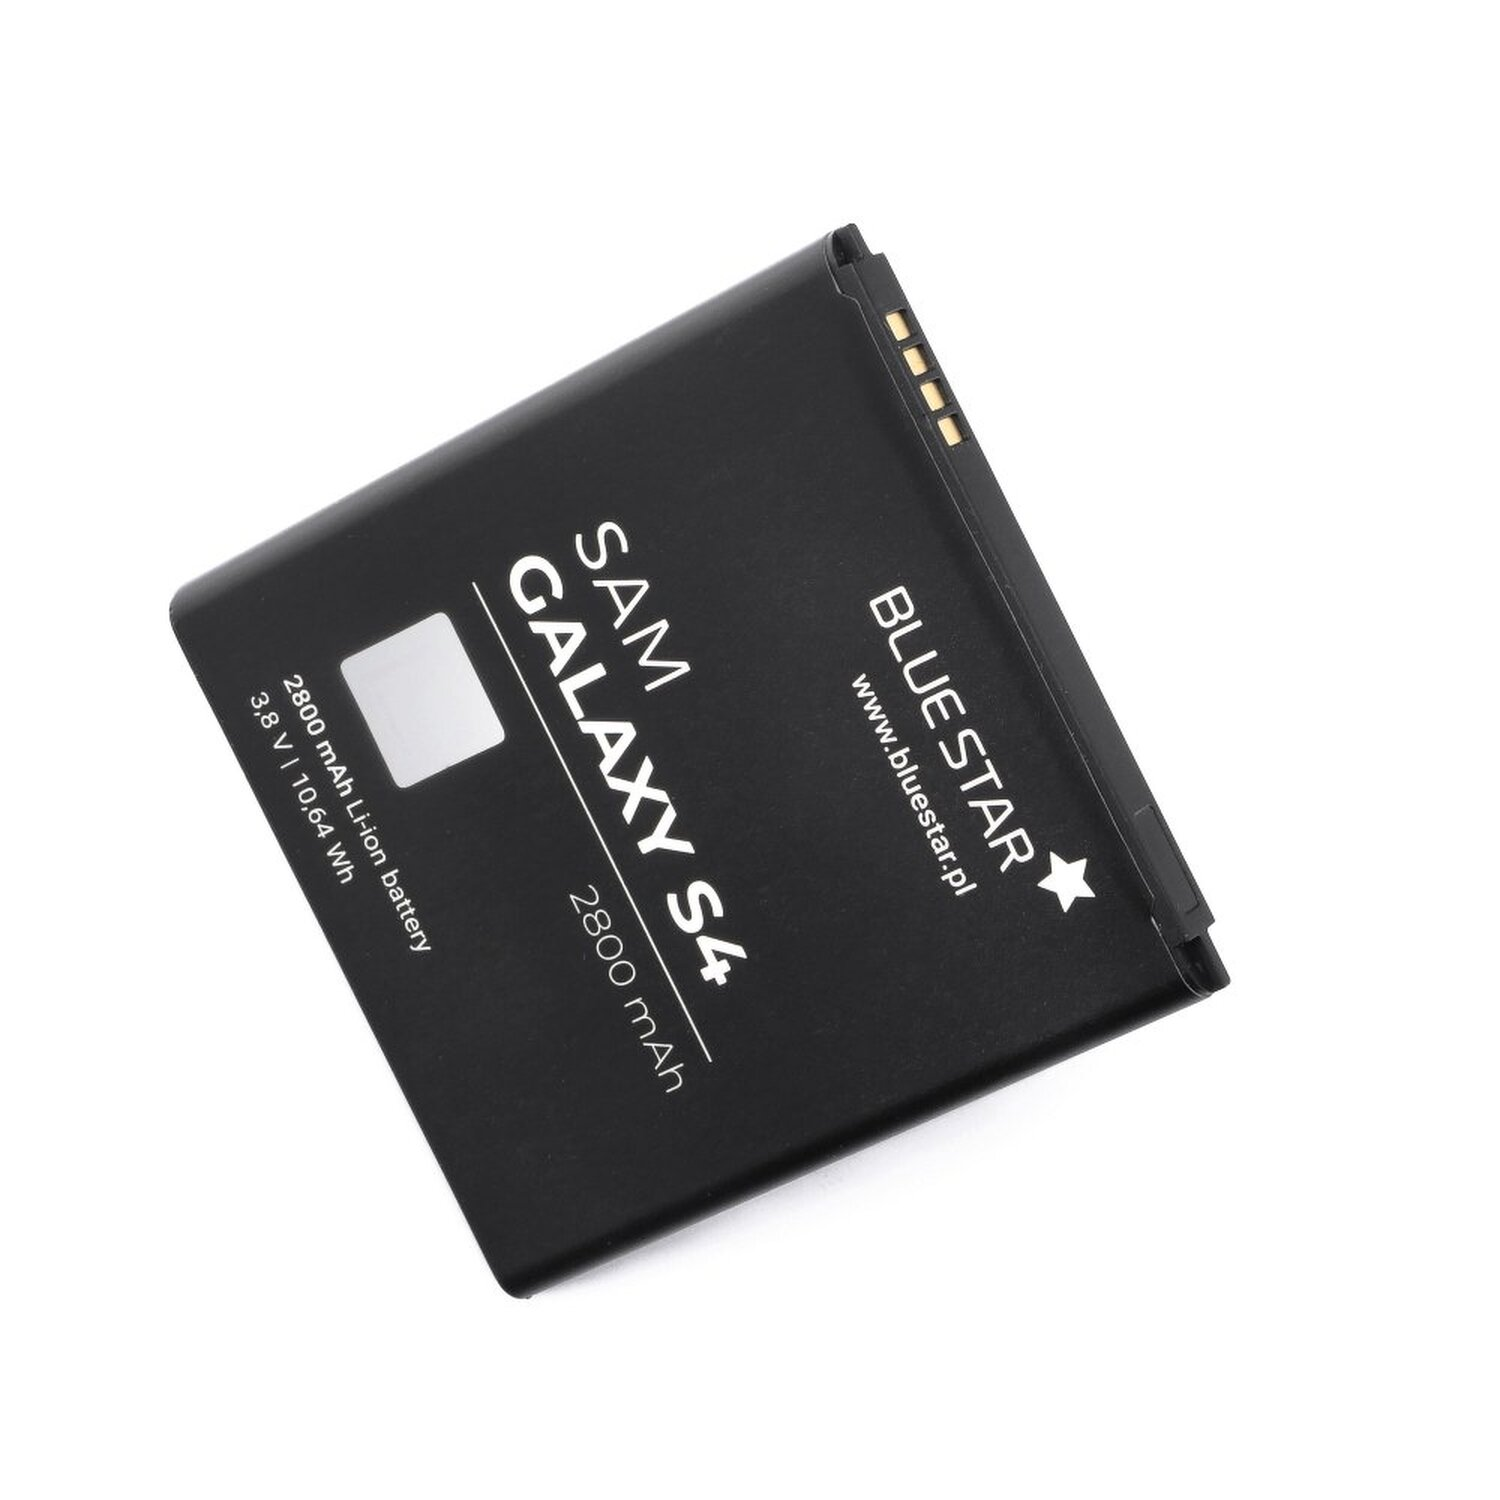 Handyakku S4 BLUESTAR für I9500 Li-Ion Akku Galaxy Samsung